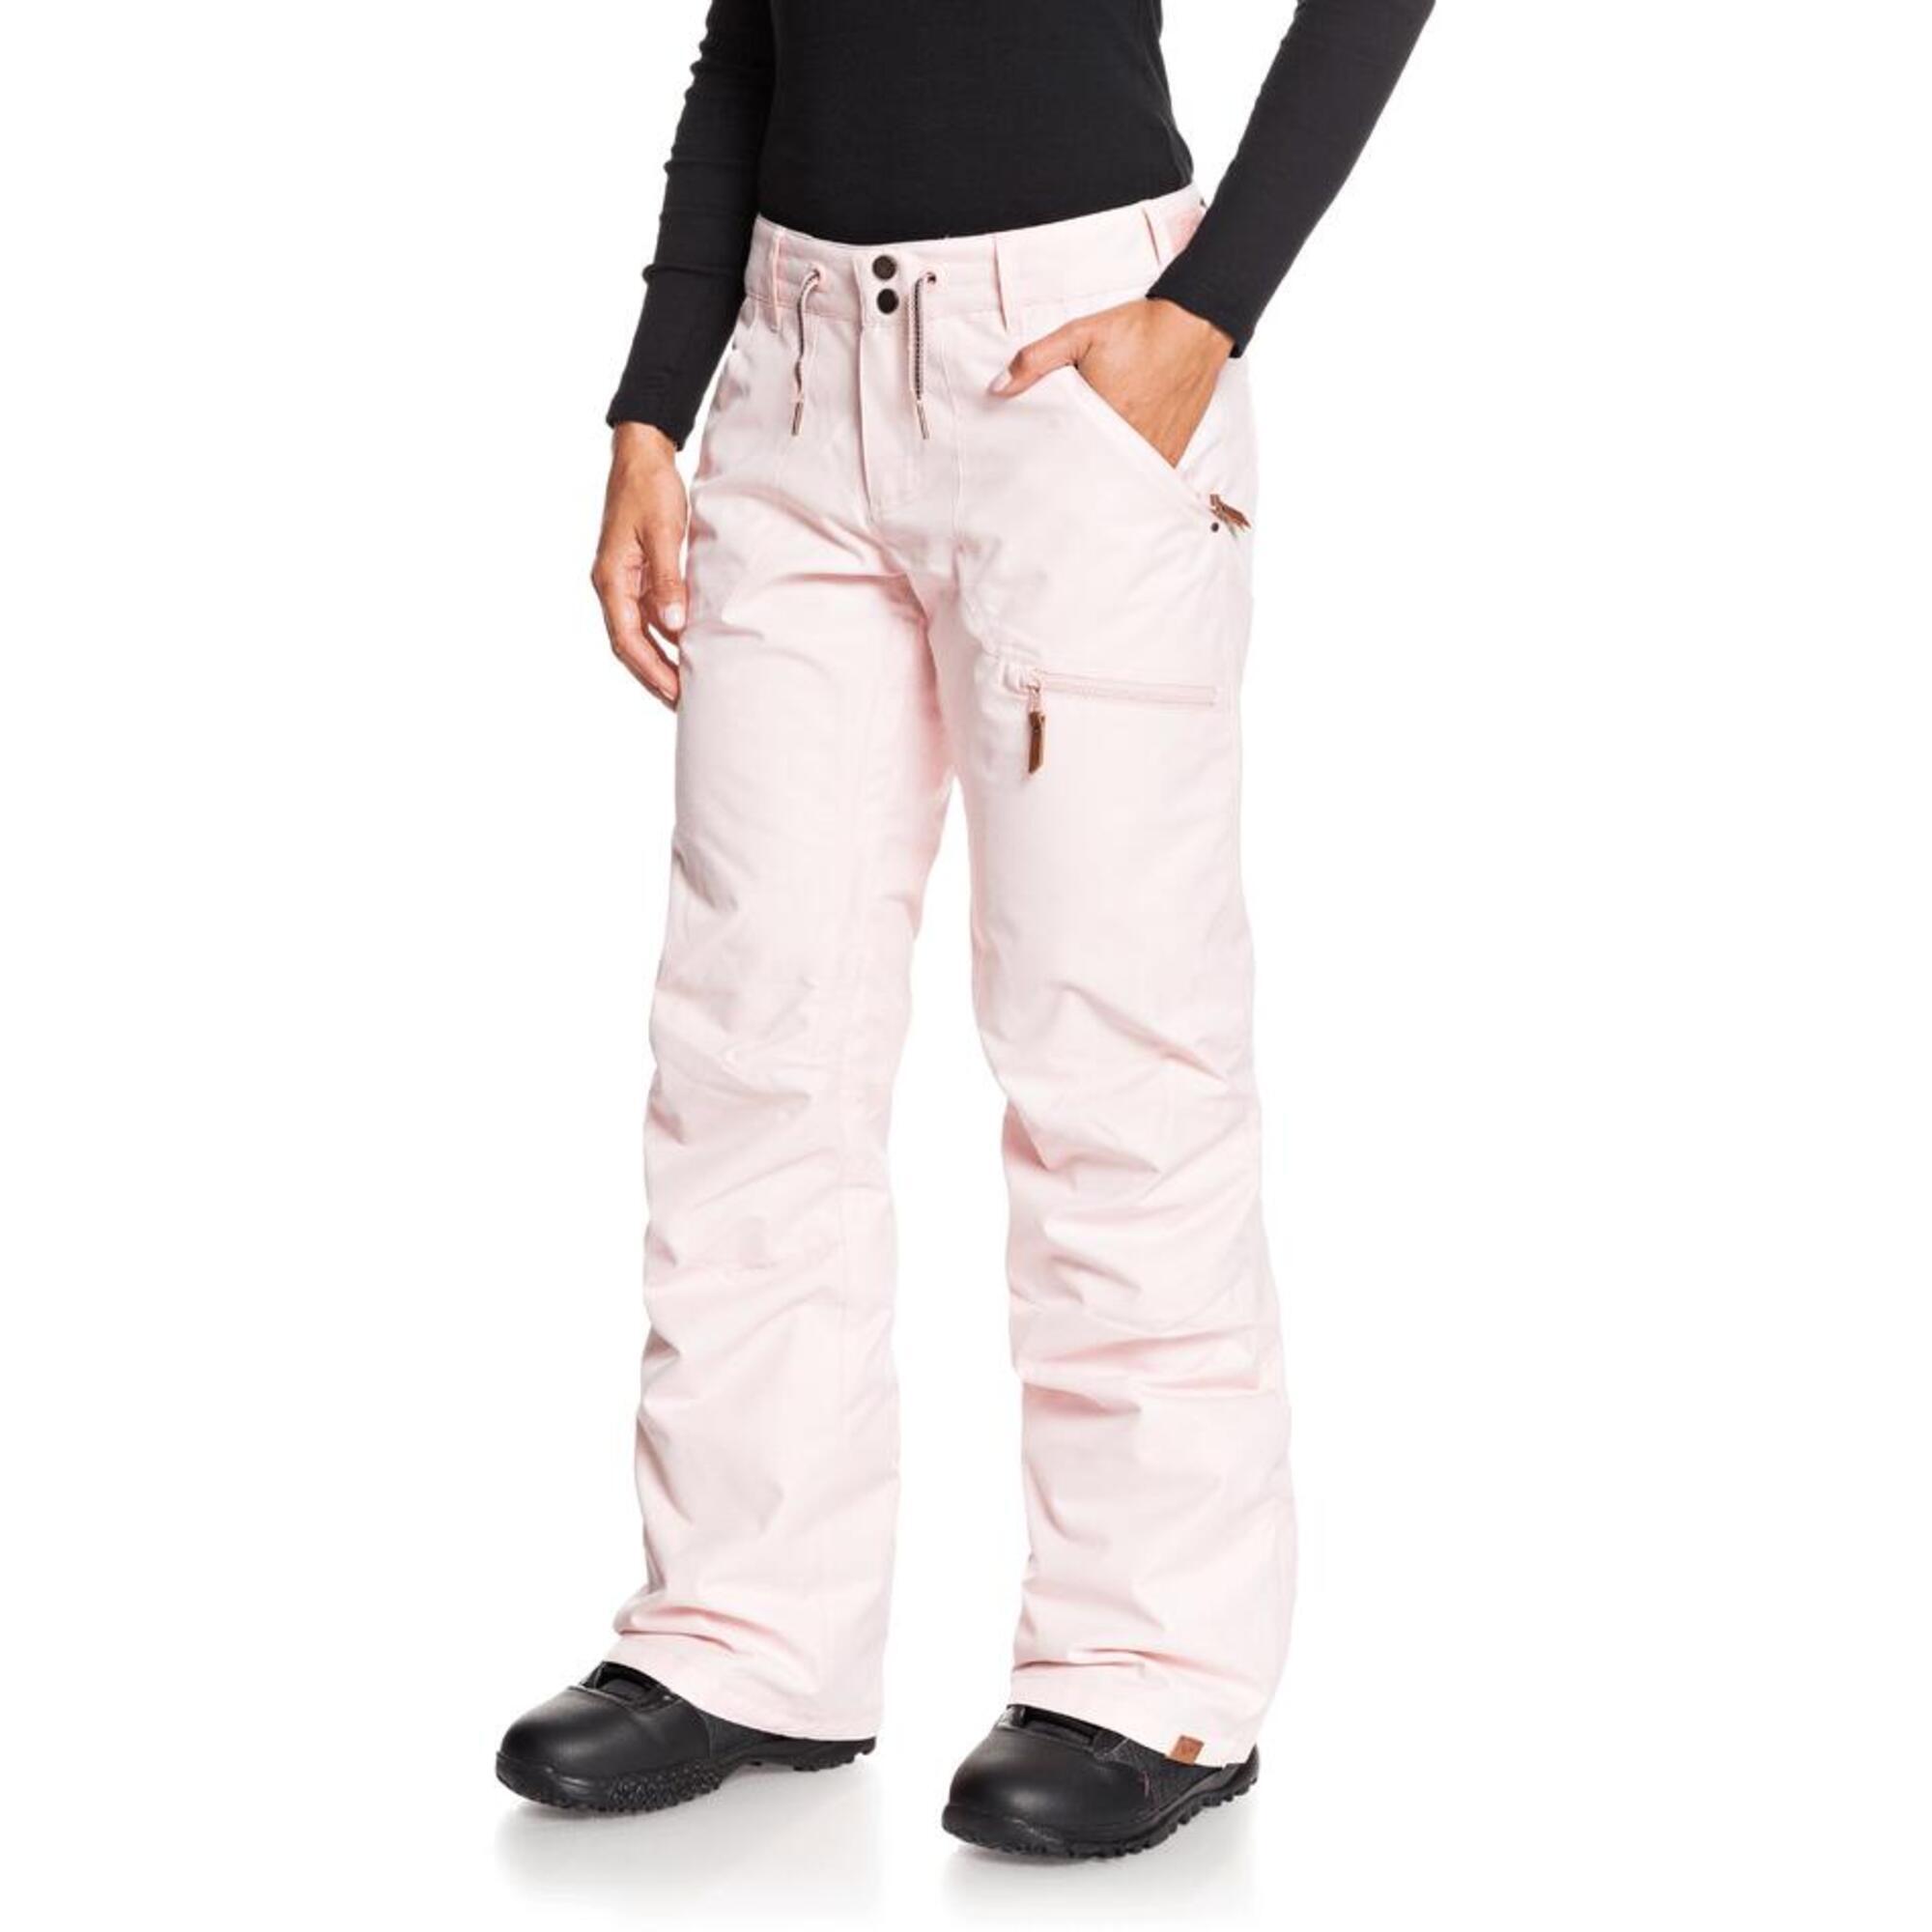 Nadia - pantalon de neige pour femmes ski & snow women's